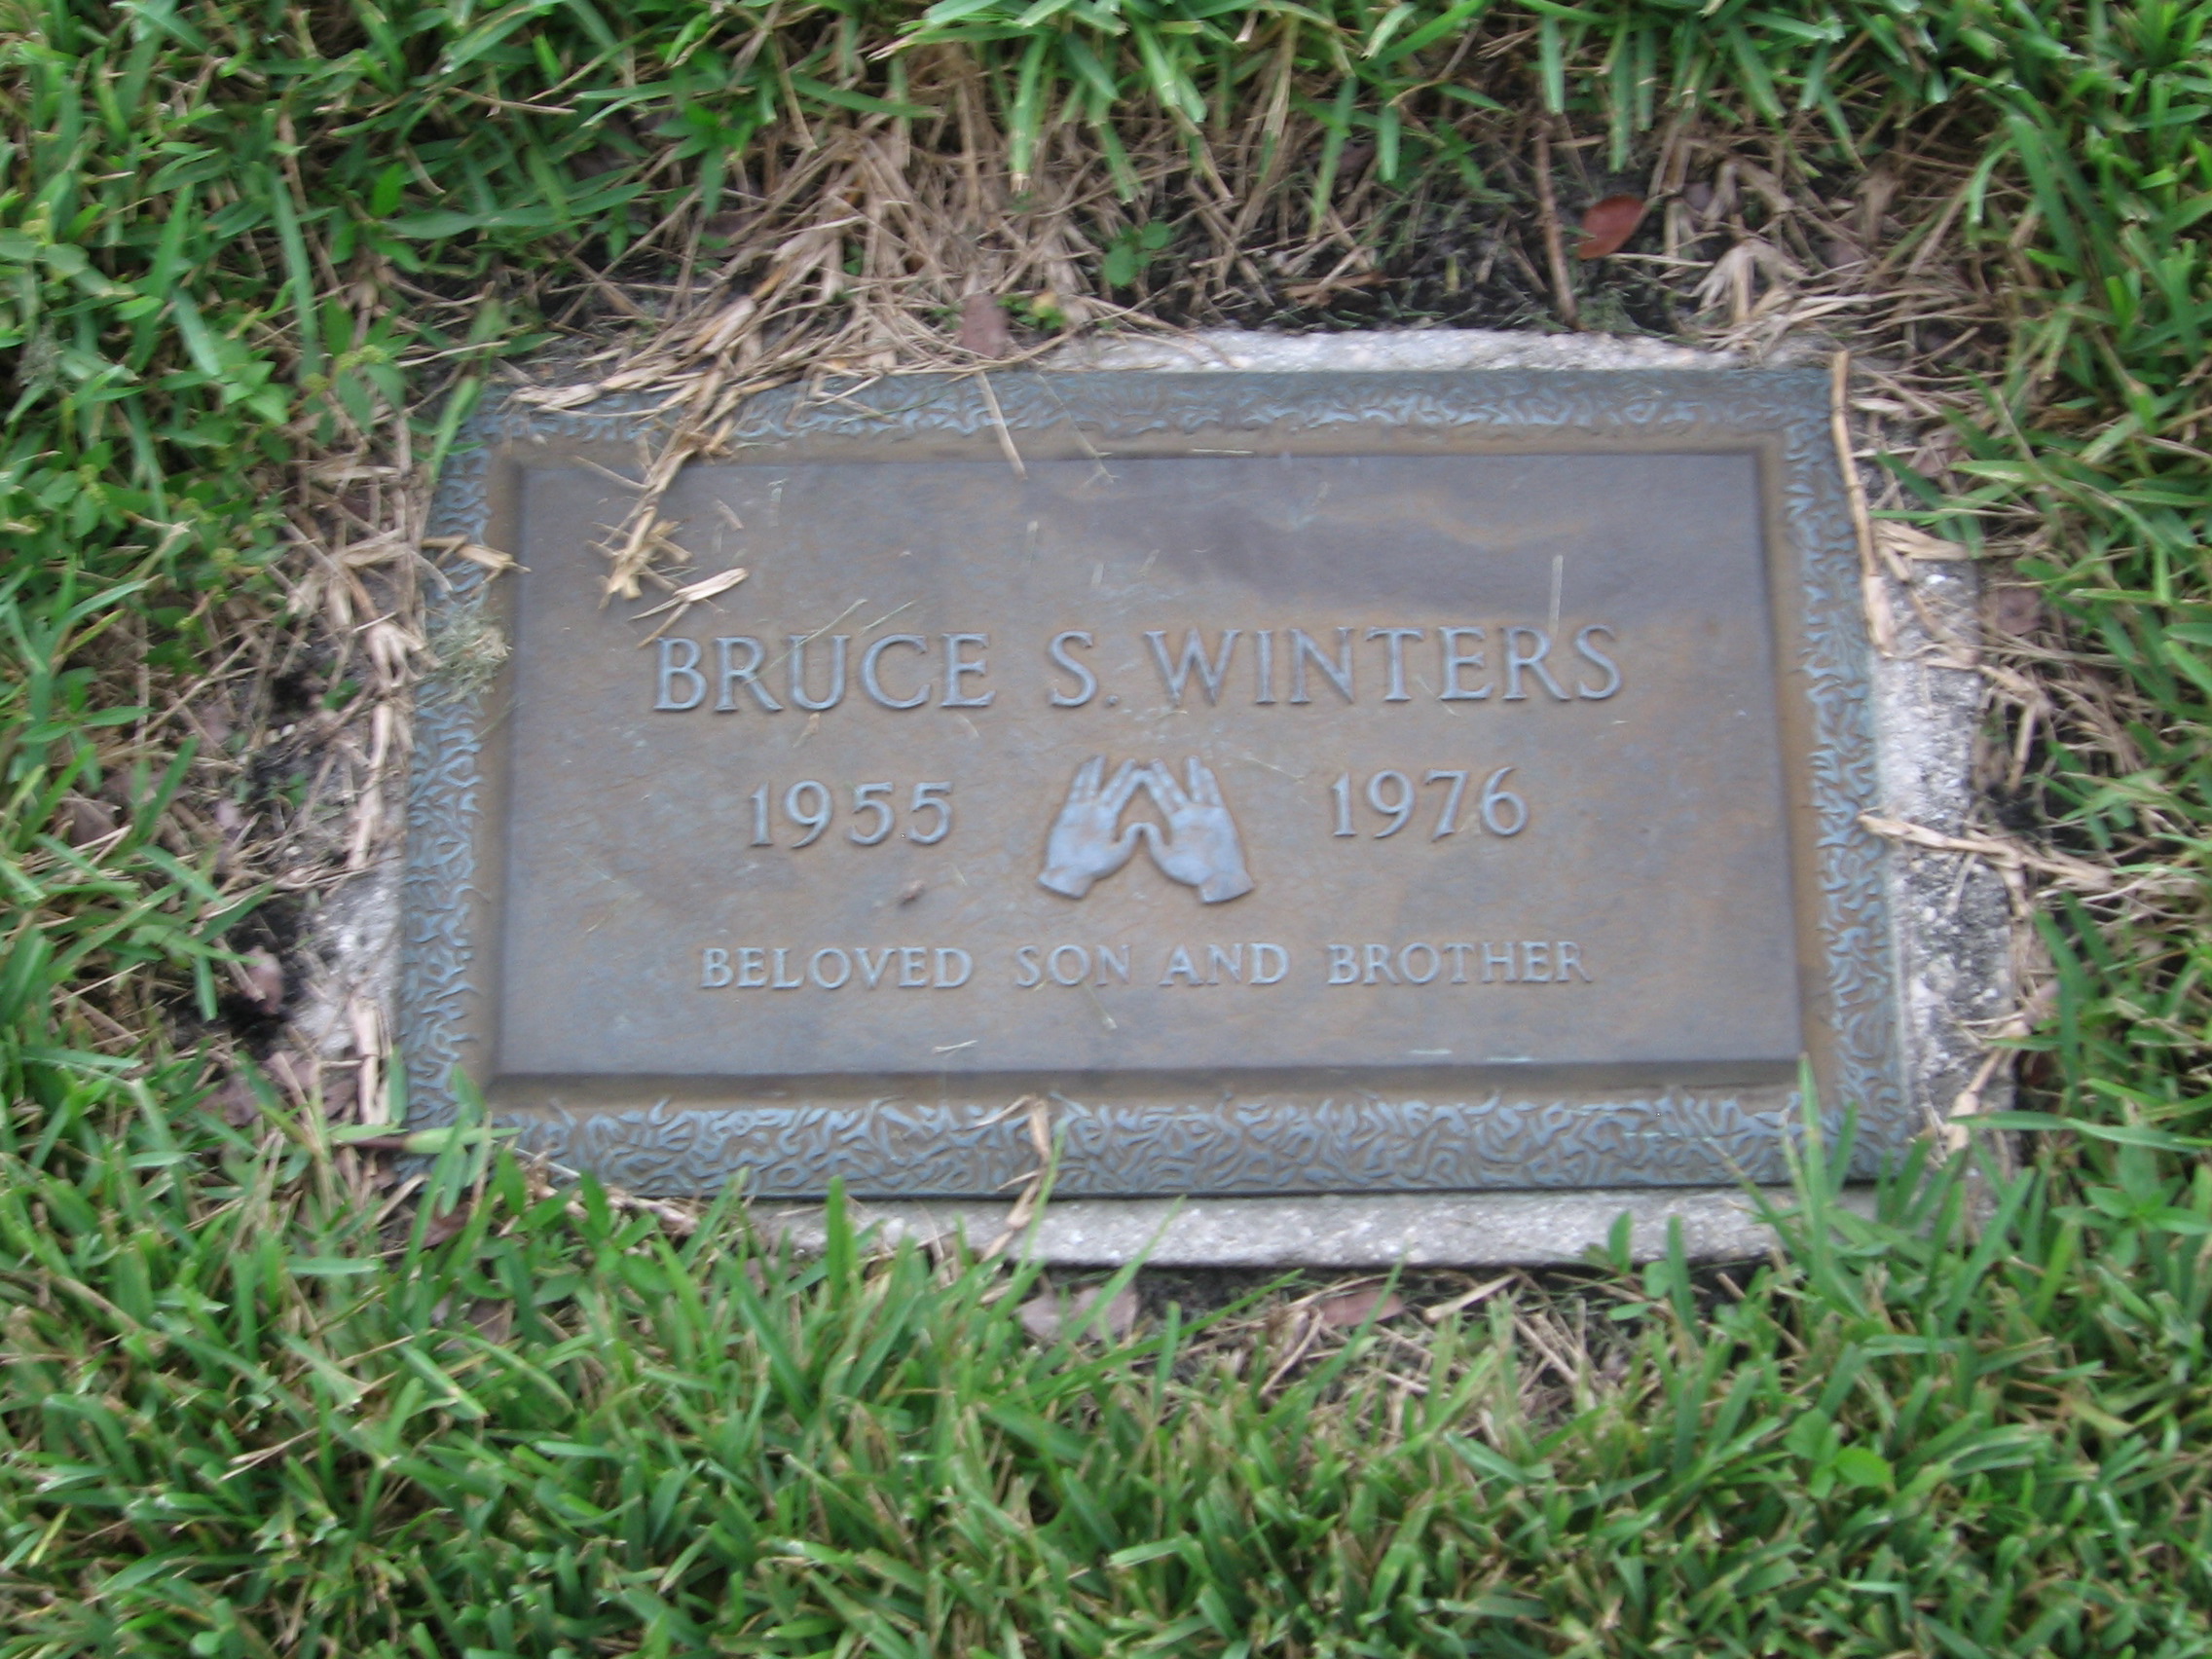 Bruce S Winters